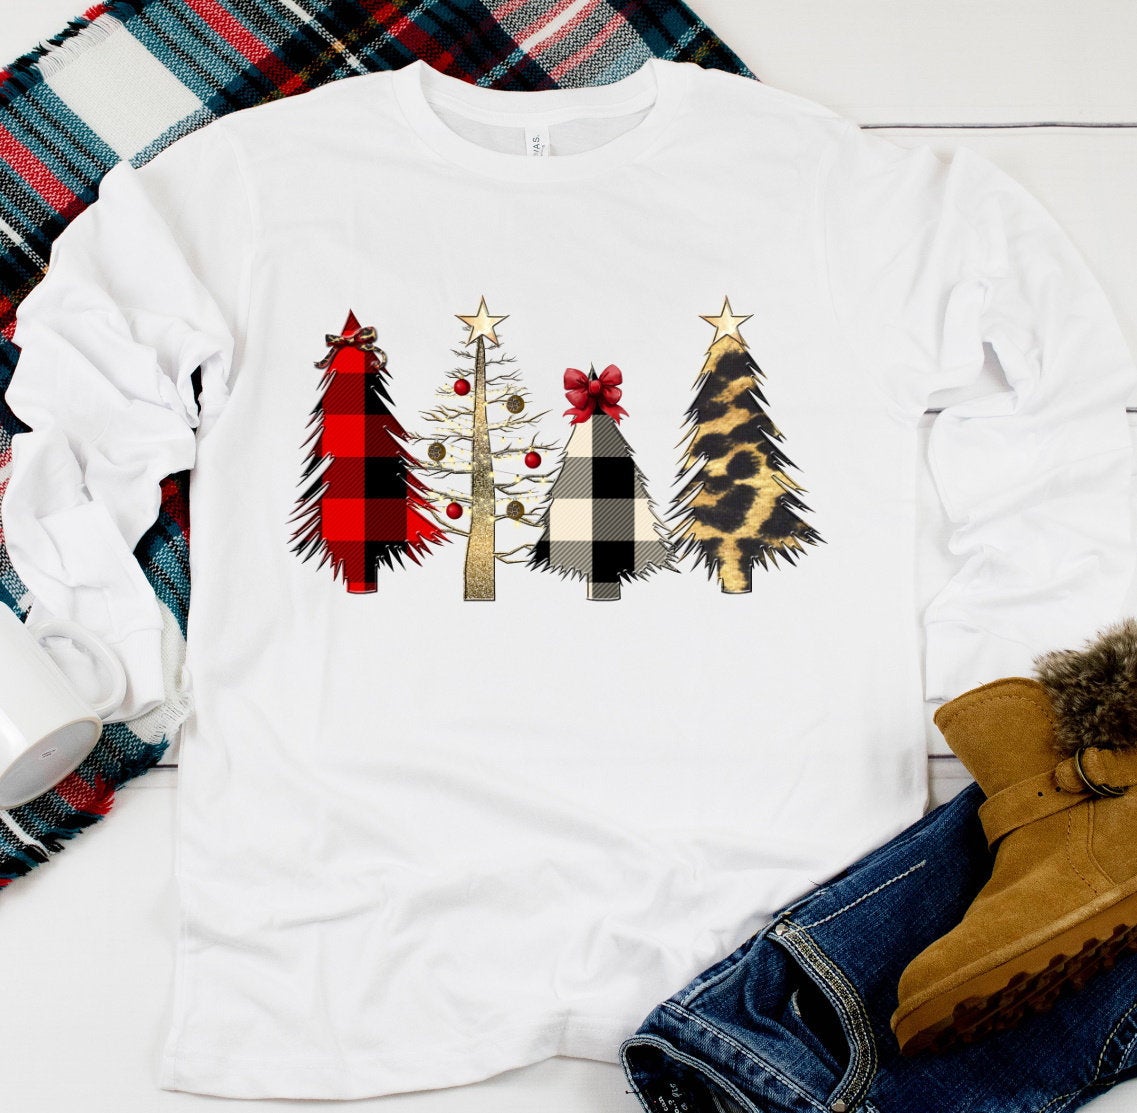 Wild Christmas Trees Buffalo Plaid t-shirt shirt Novelty Graphic Tee t-shirt Shirt